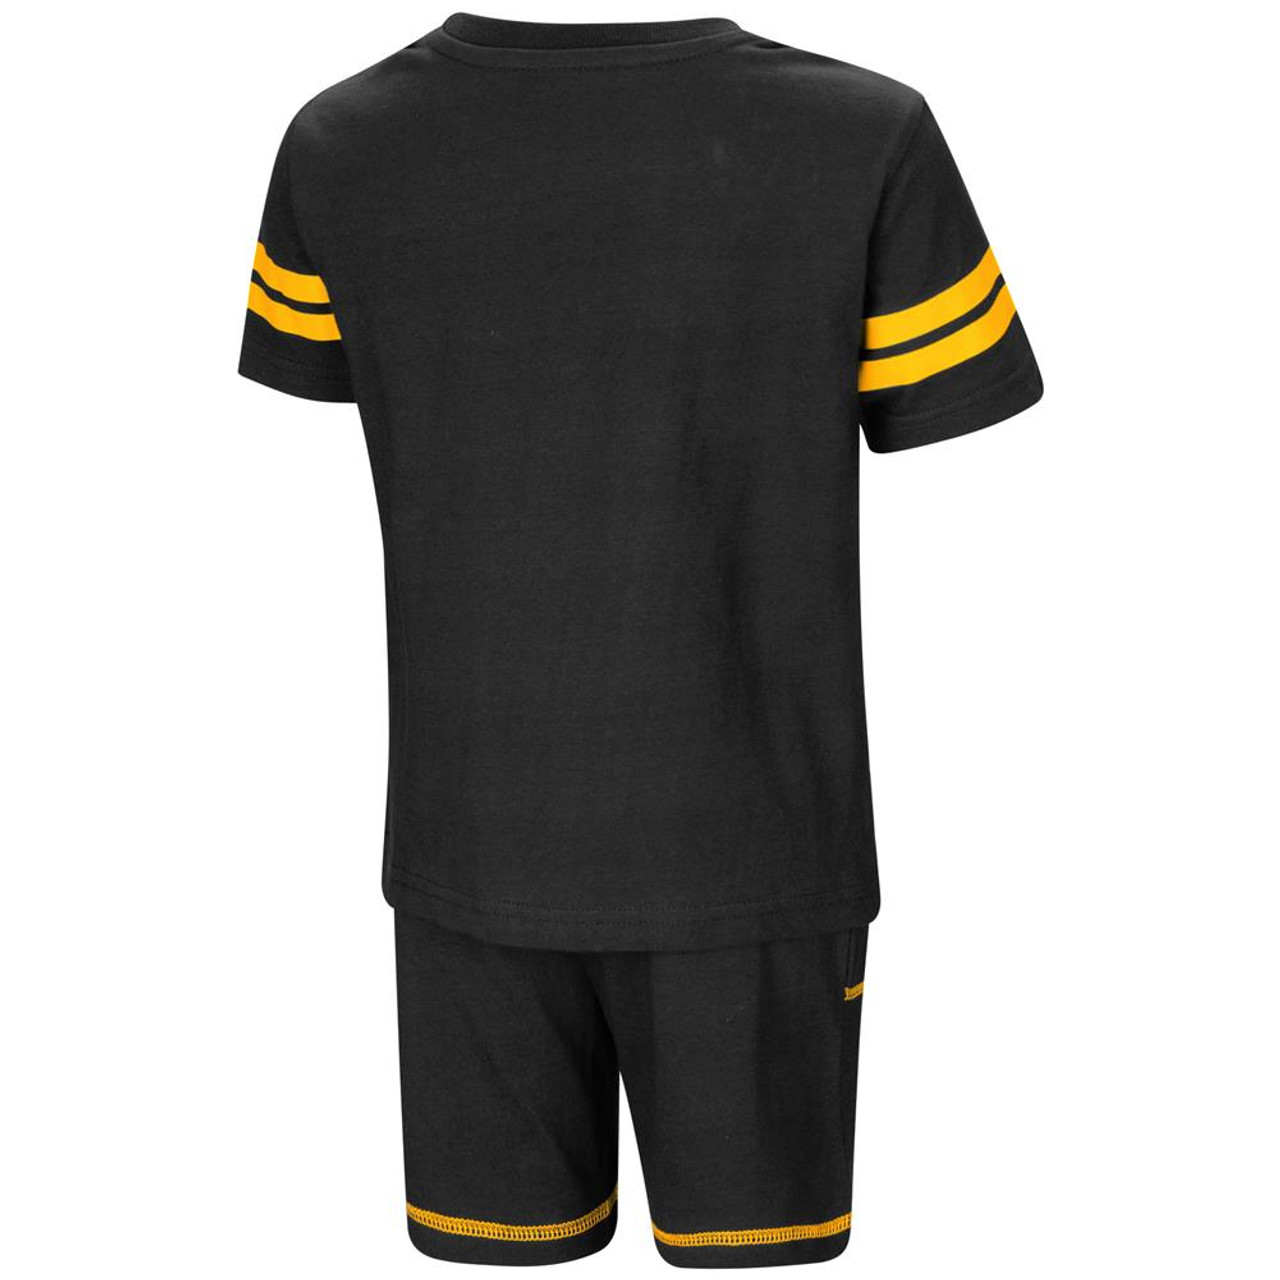 Adidas NBA Toddlers Charlotte Bobcats Short Sleeve Primary Logo Tee, Orange, Size: 3T